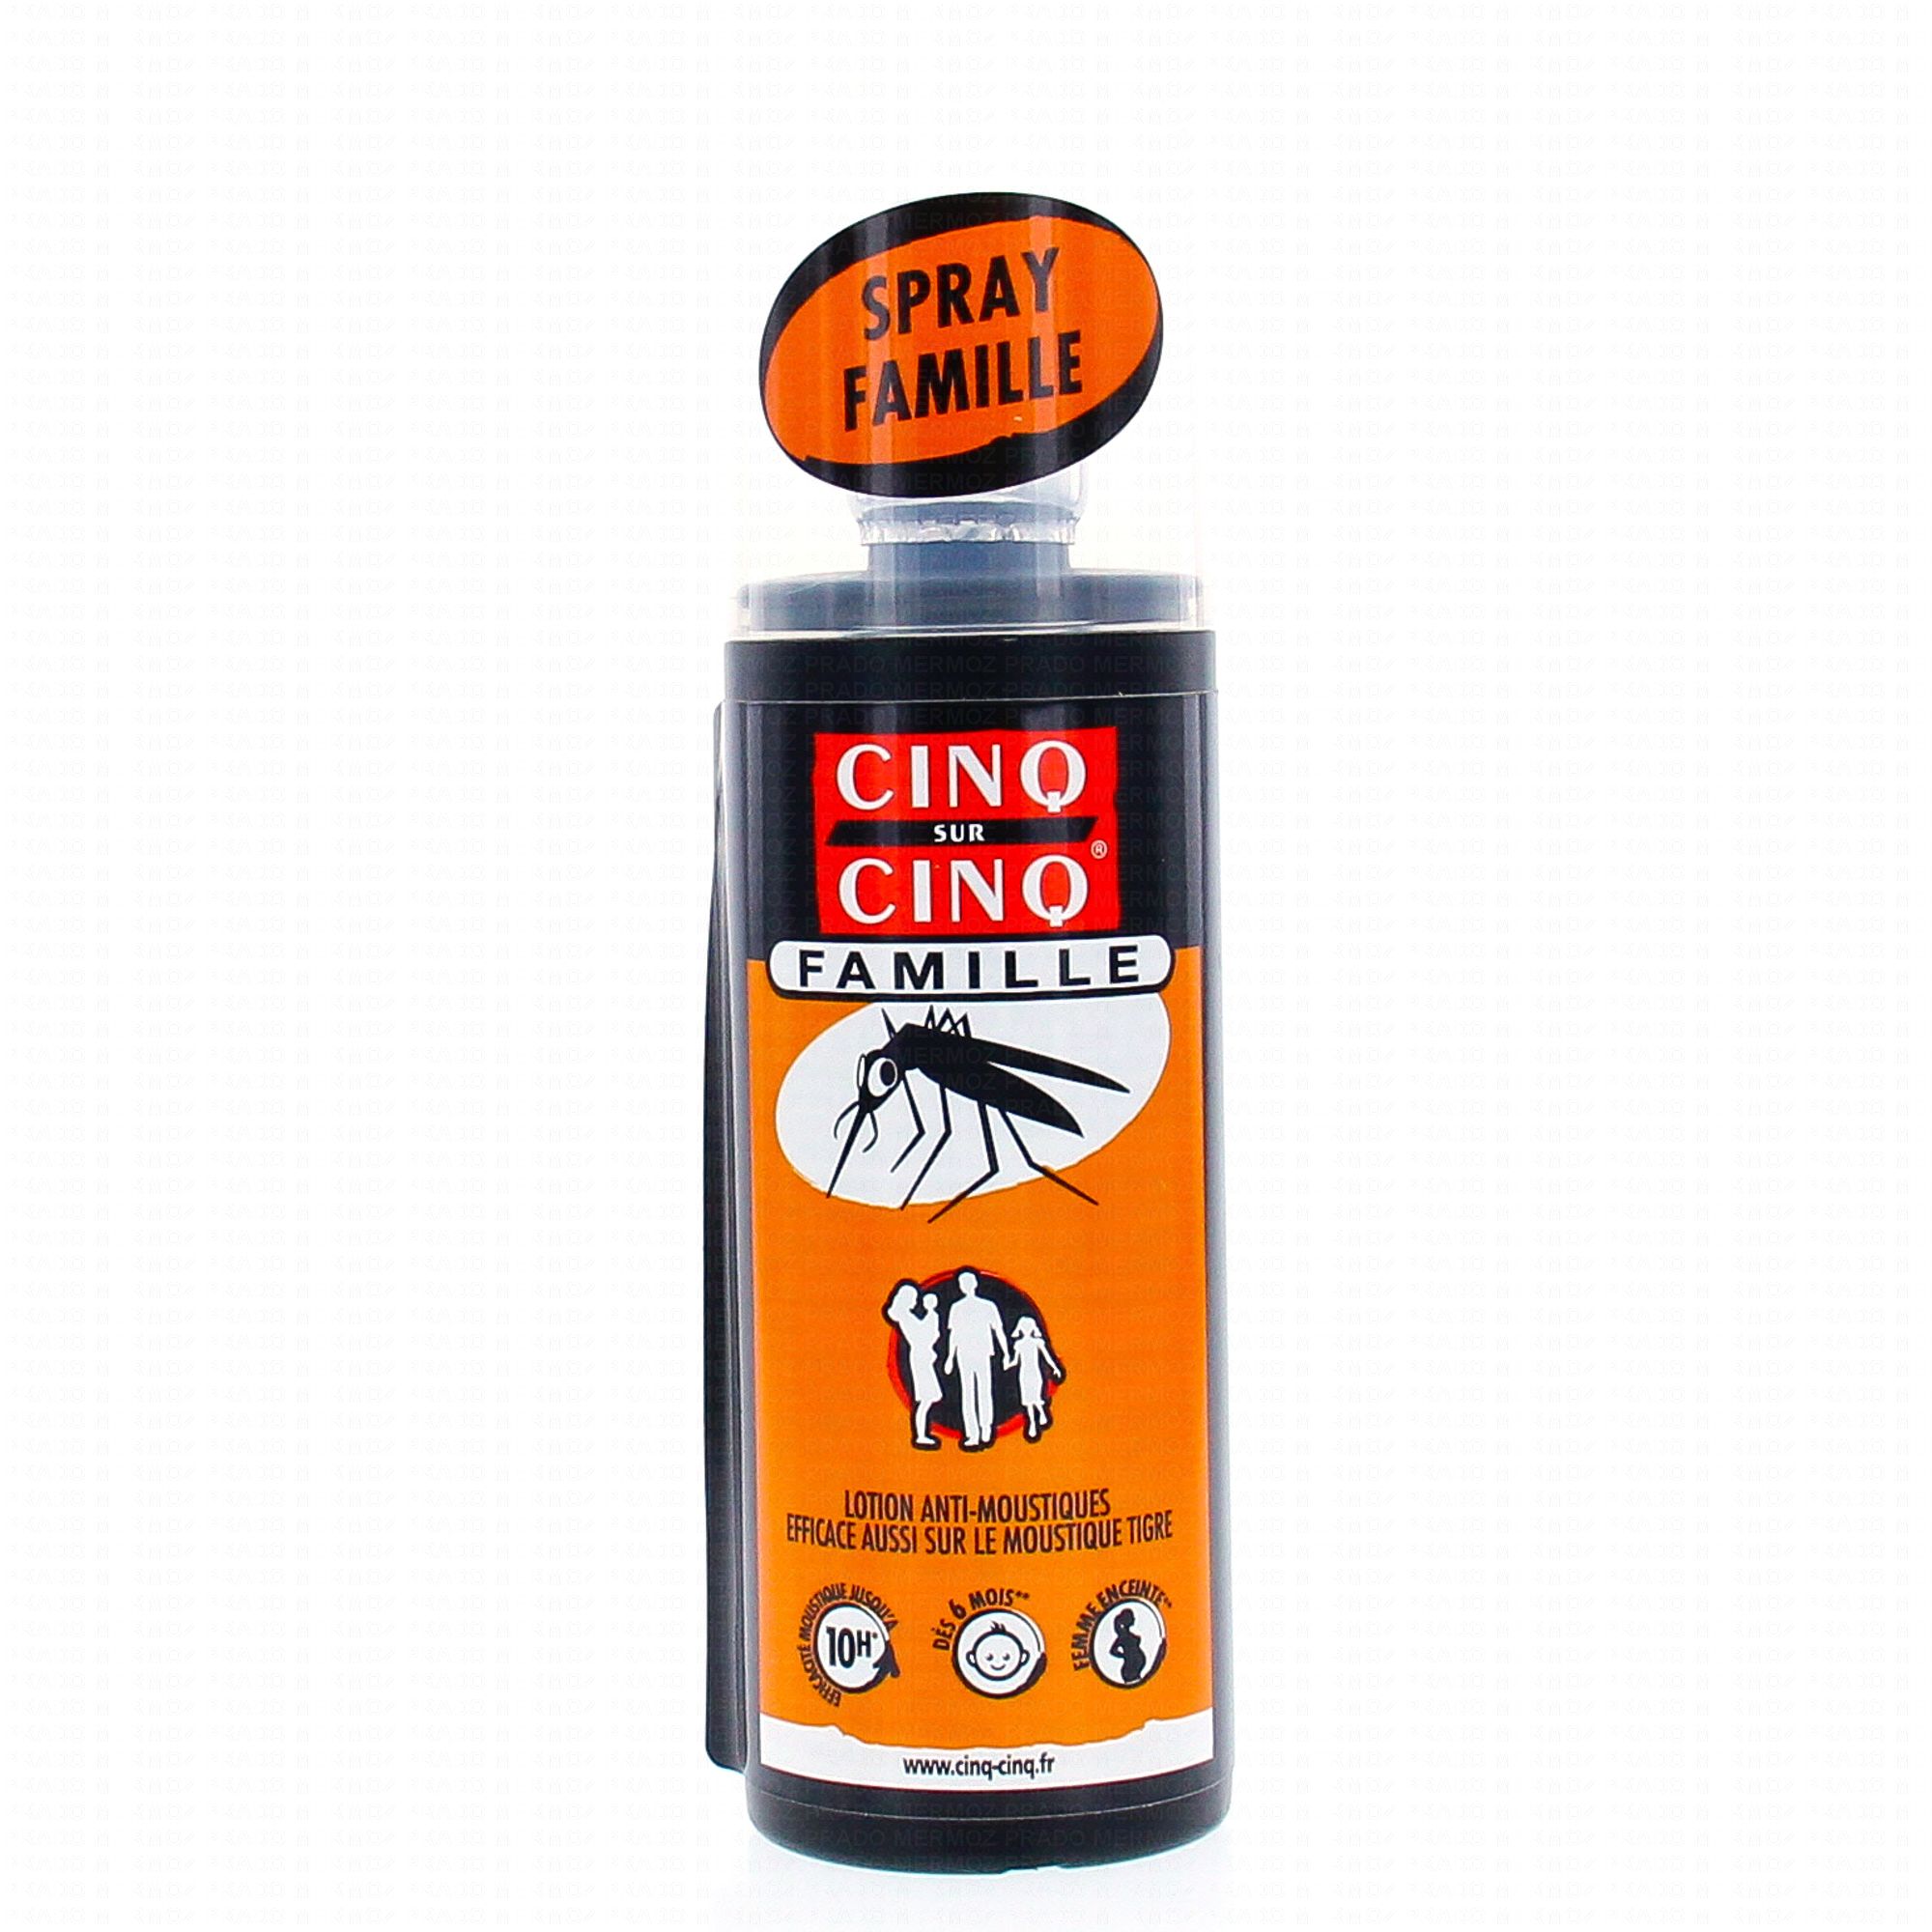 CINQ SUR CINQ Spray anti-moustiques 100ml - Parapharmacie Prado Mermoz